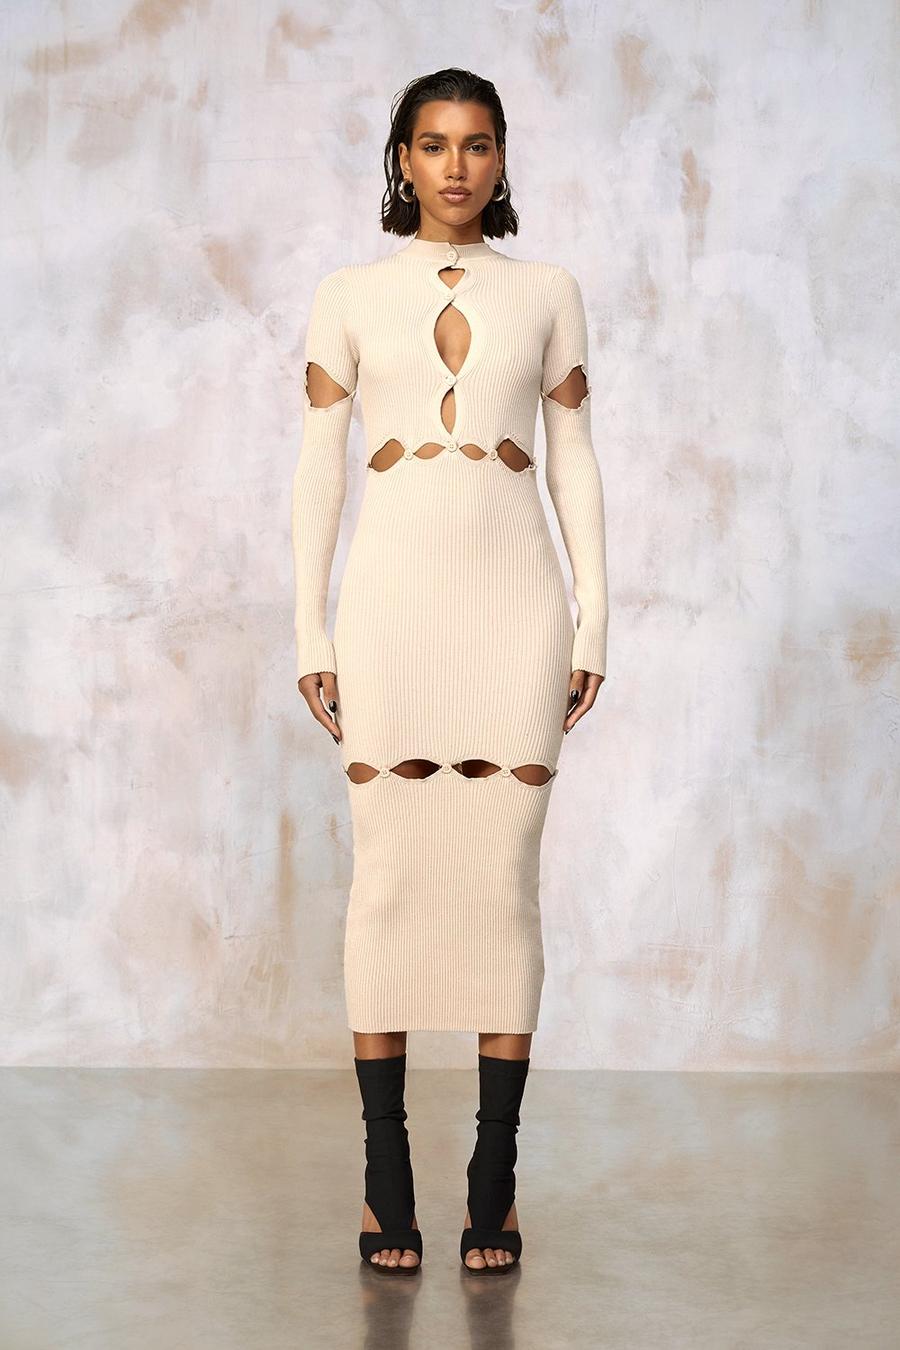 Bone Kourtney Kardashian Barker Multiway Knitted Dress